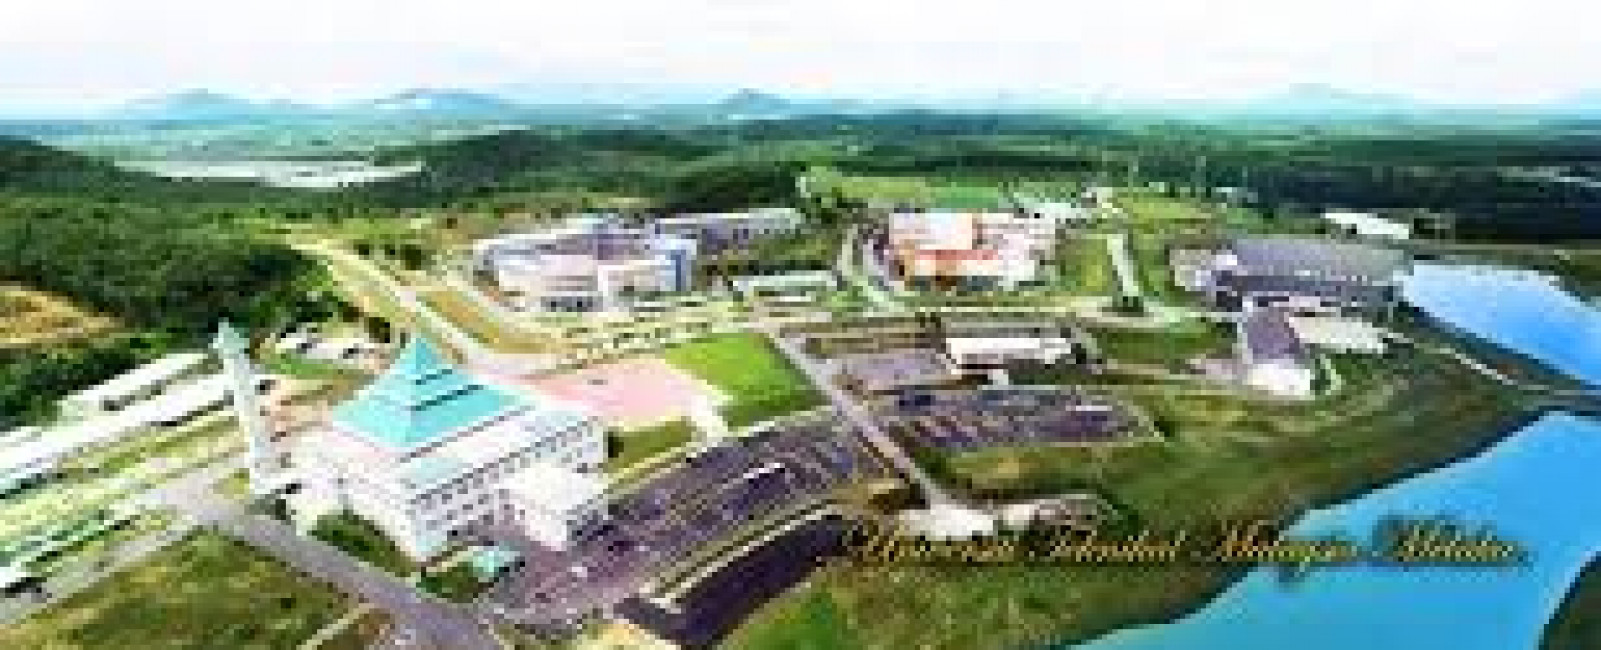 Universiti Teknikal Malaysia Melaka | MyCompass